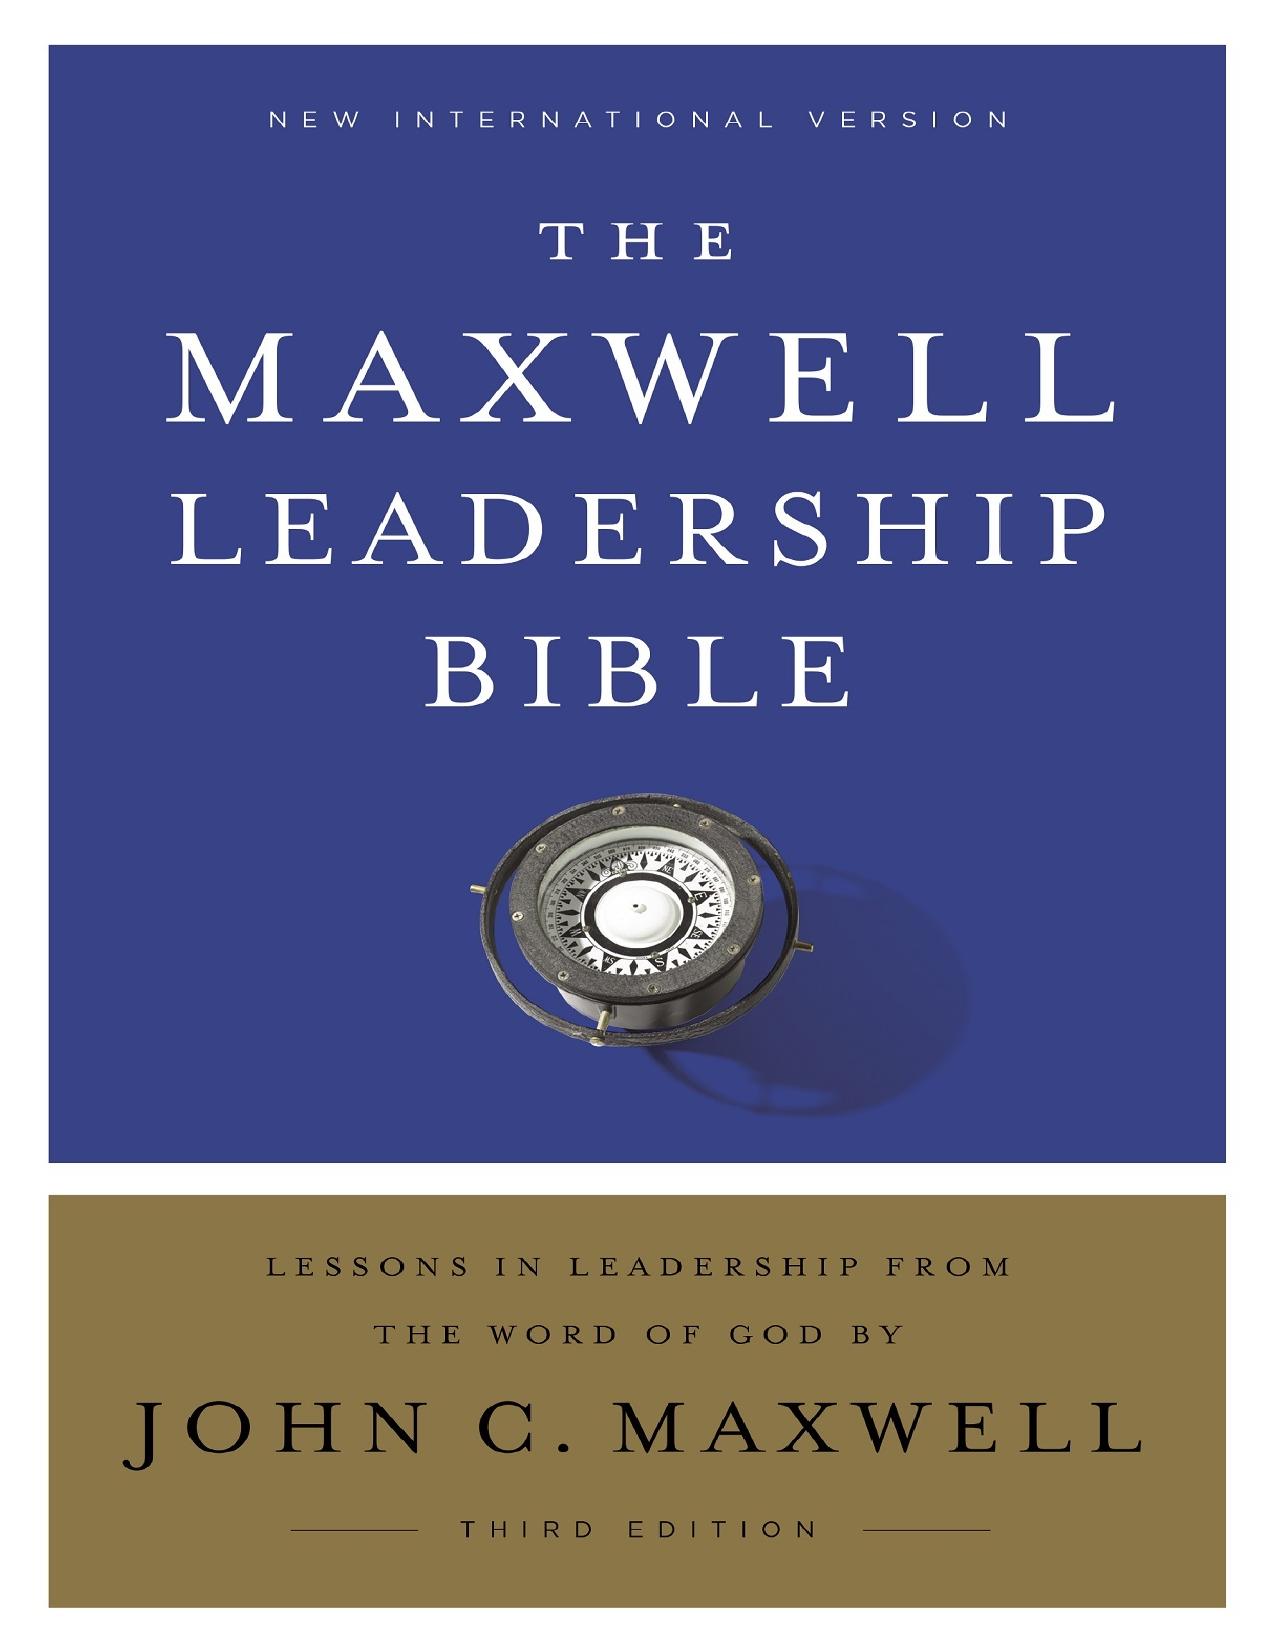 NIV, Maxwell Leadership Bible, 3rd Edition - PDFDrive.com